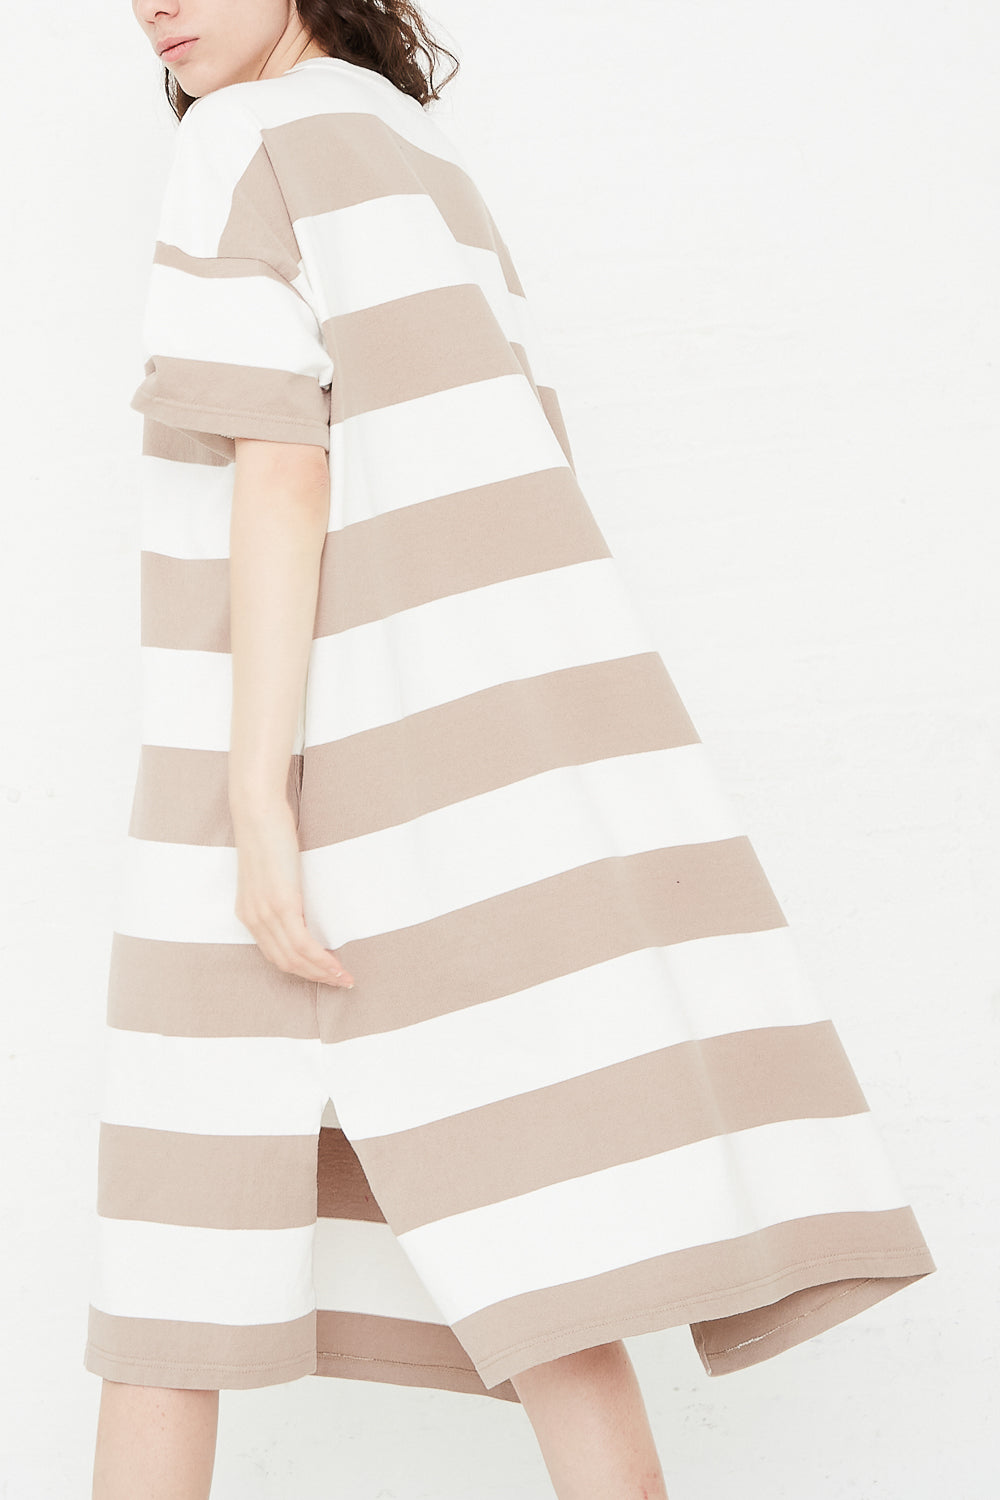 Cotton Dress in White/Beige side view